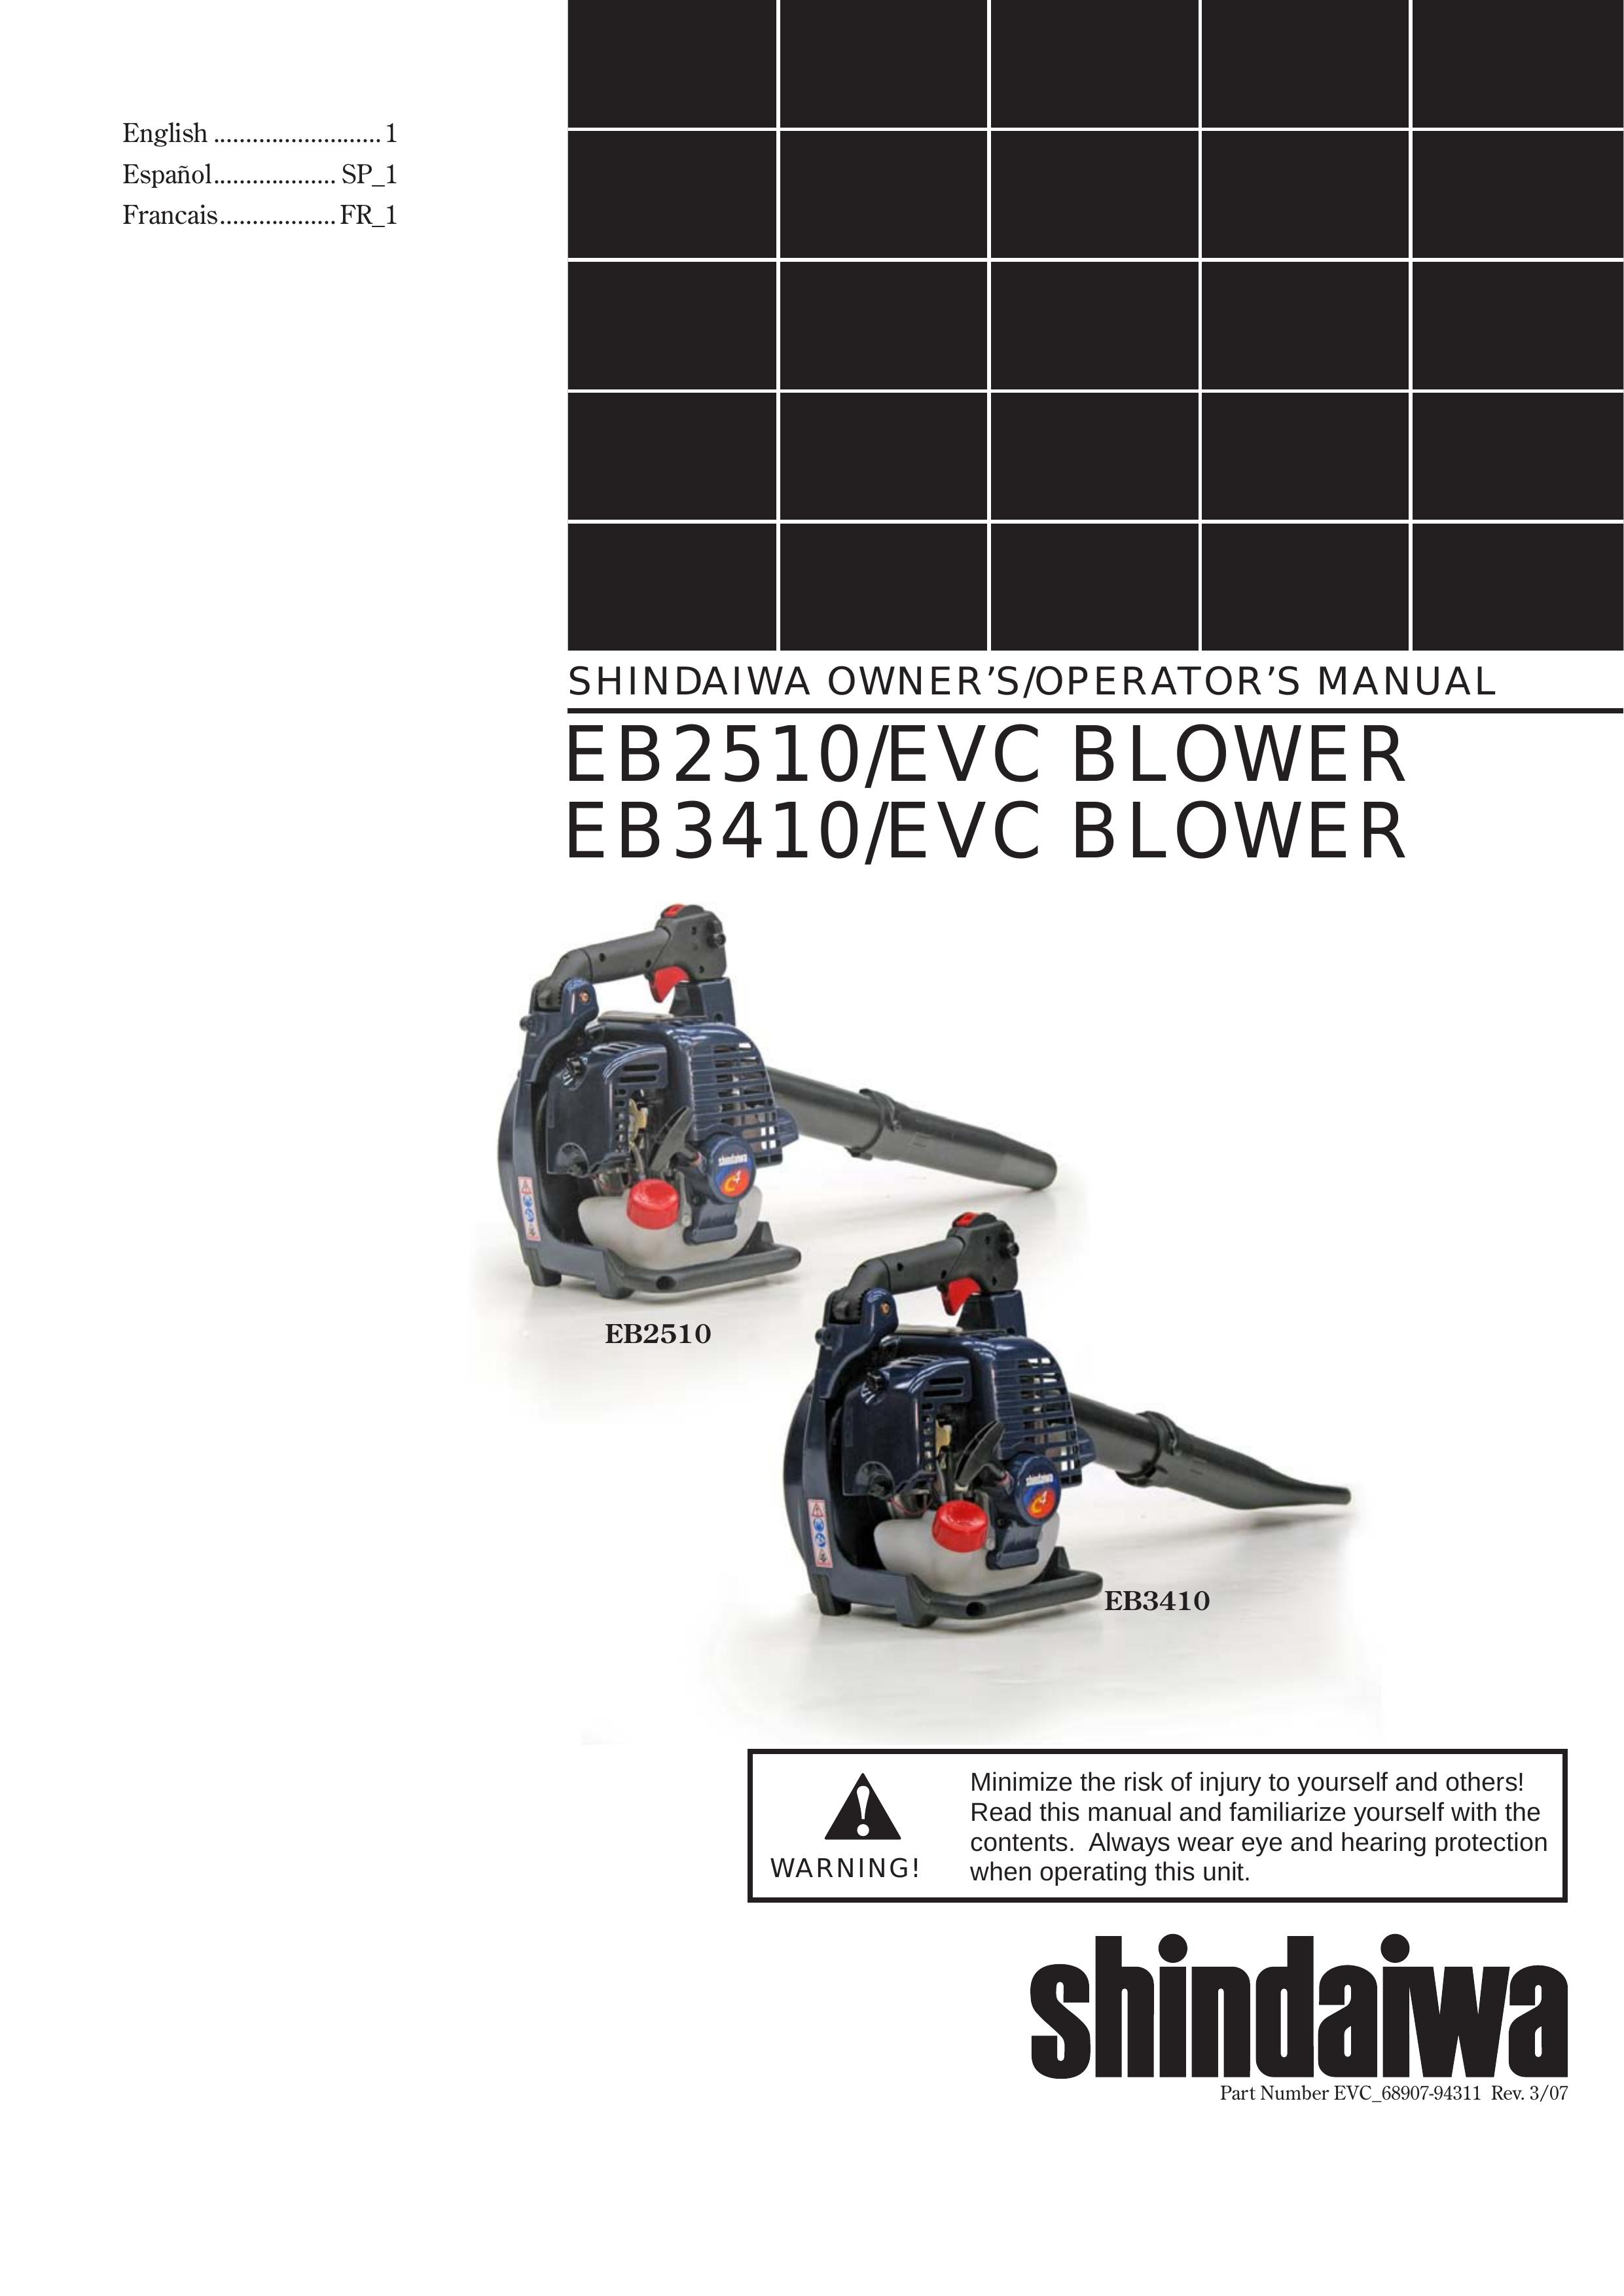 Shindaiwa EB3410 Blower User Manual